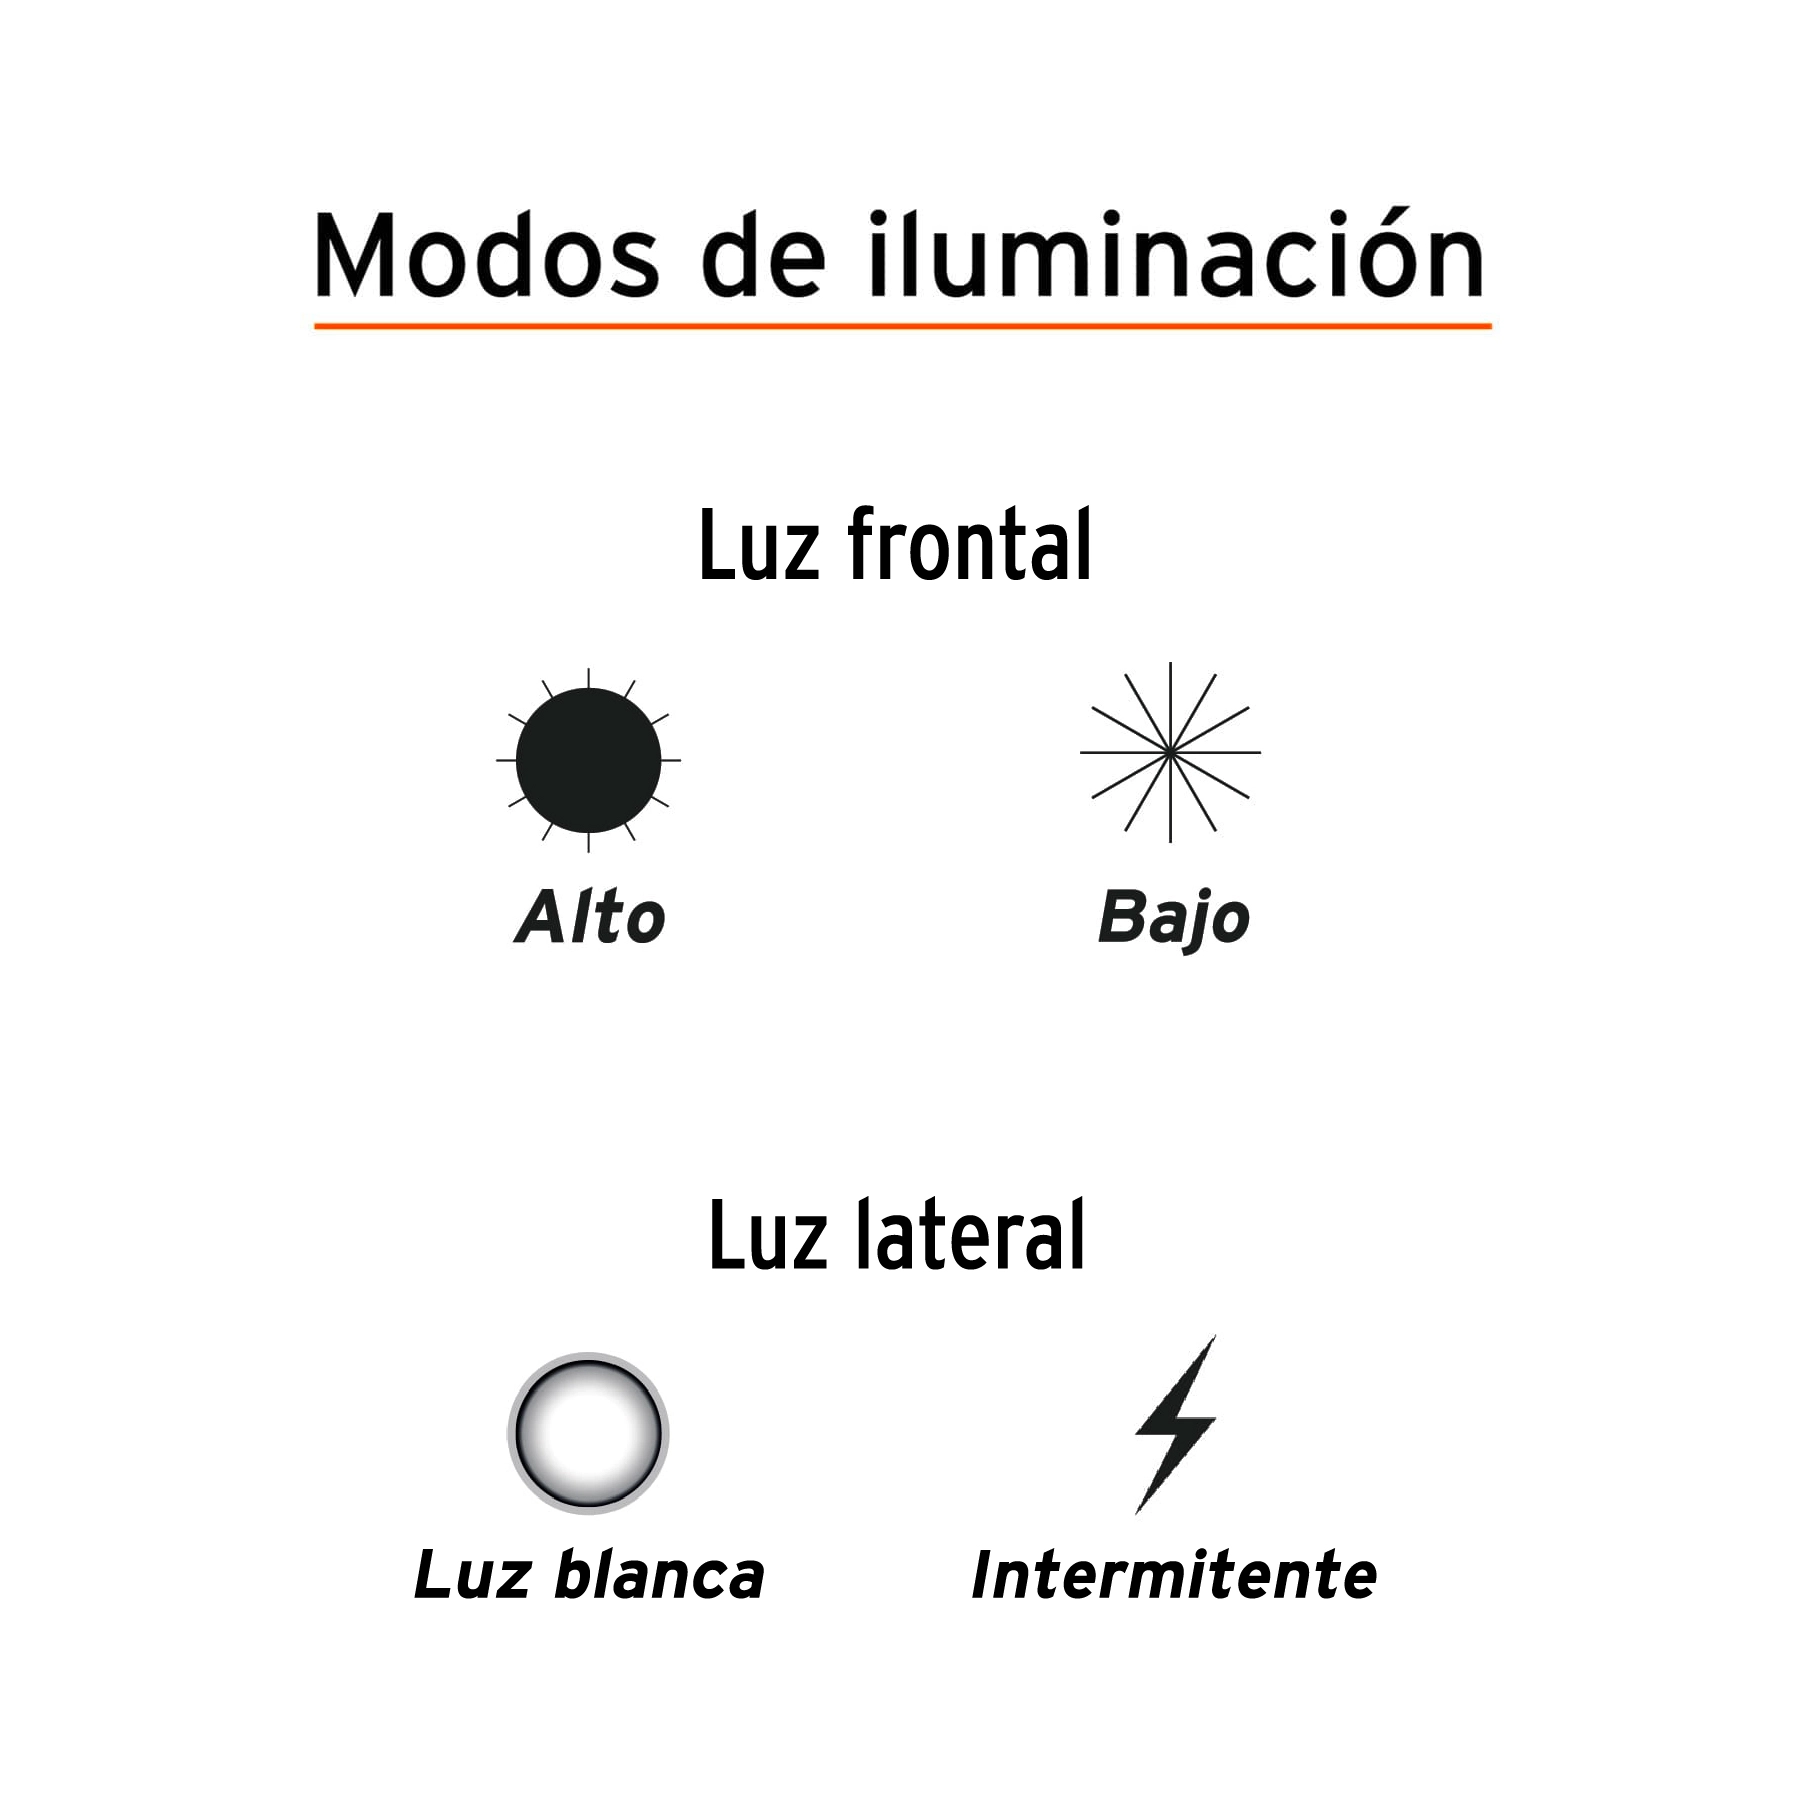 LINAR-260 Linterna LED recargable de aluminio c/luz lateral, 270 lm 100371  - JINSA Ferretería La Económica